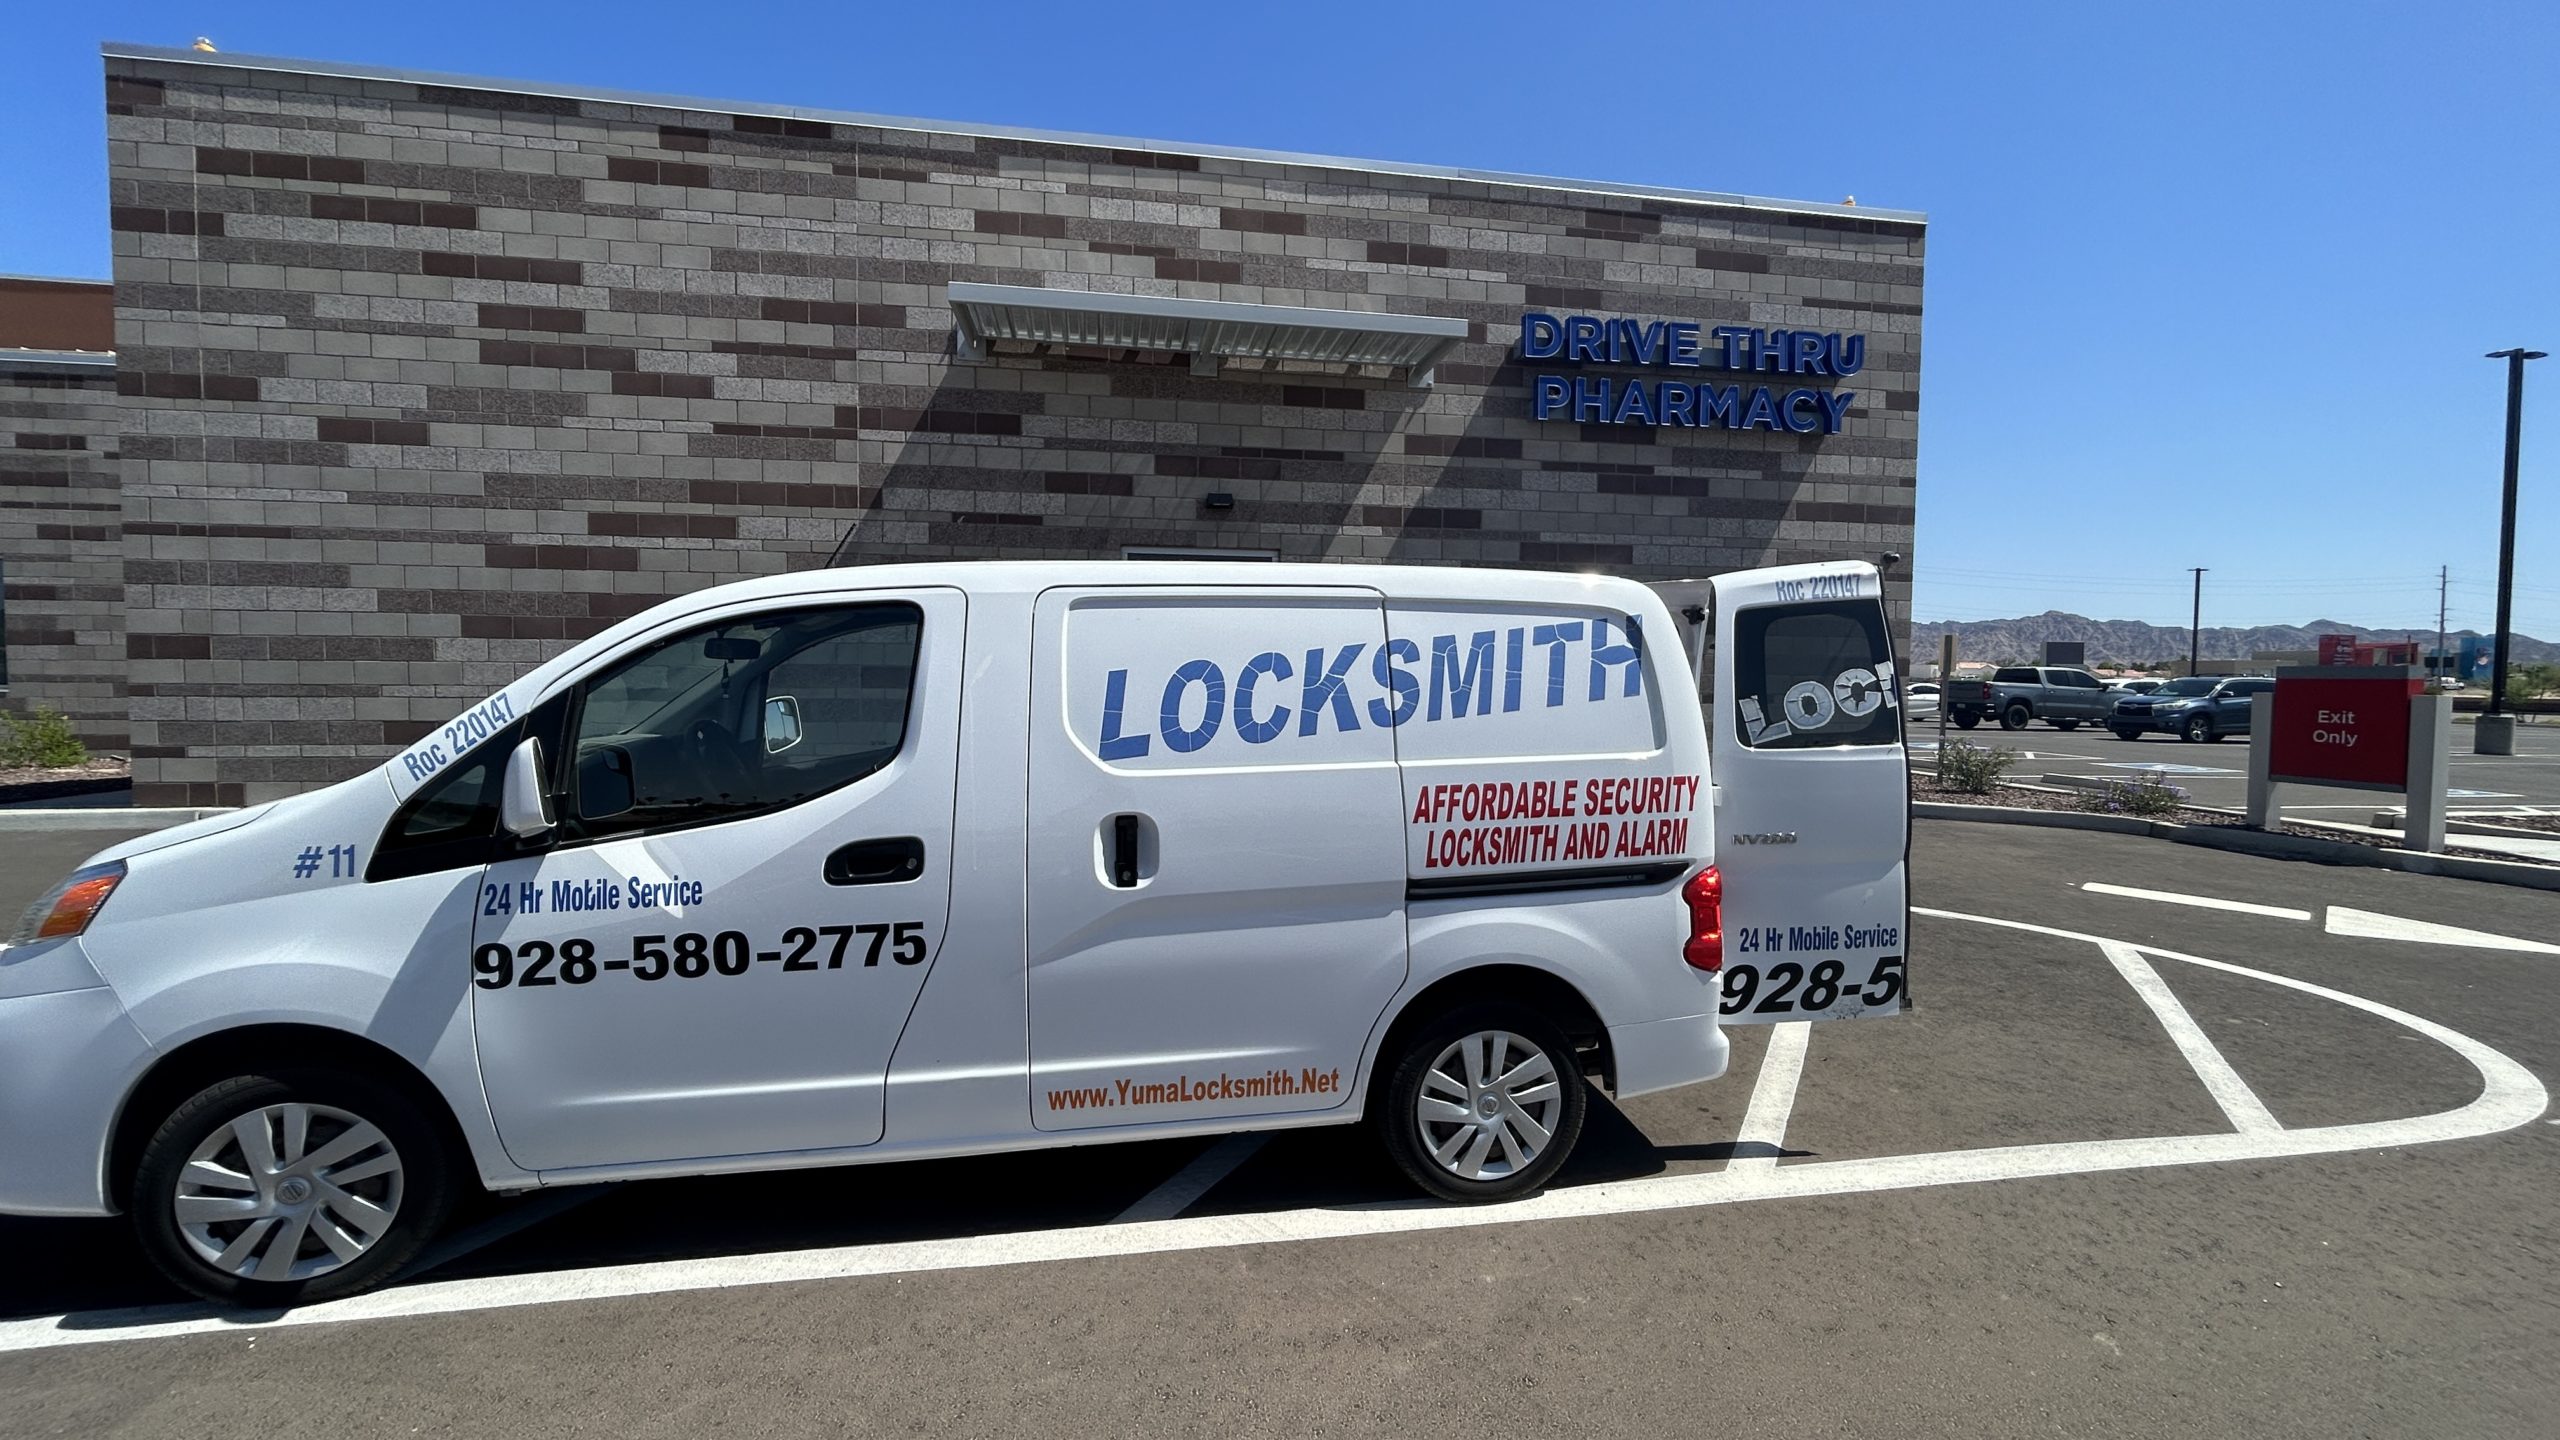 Yuma Locksmith Service Van